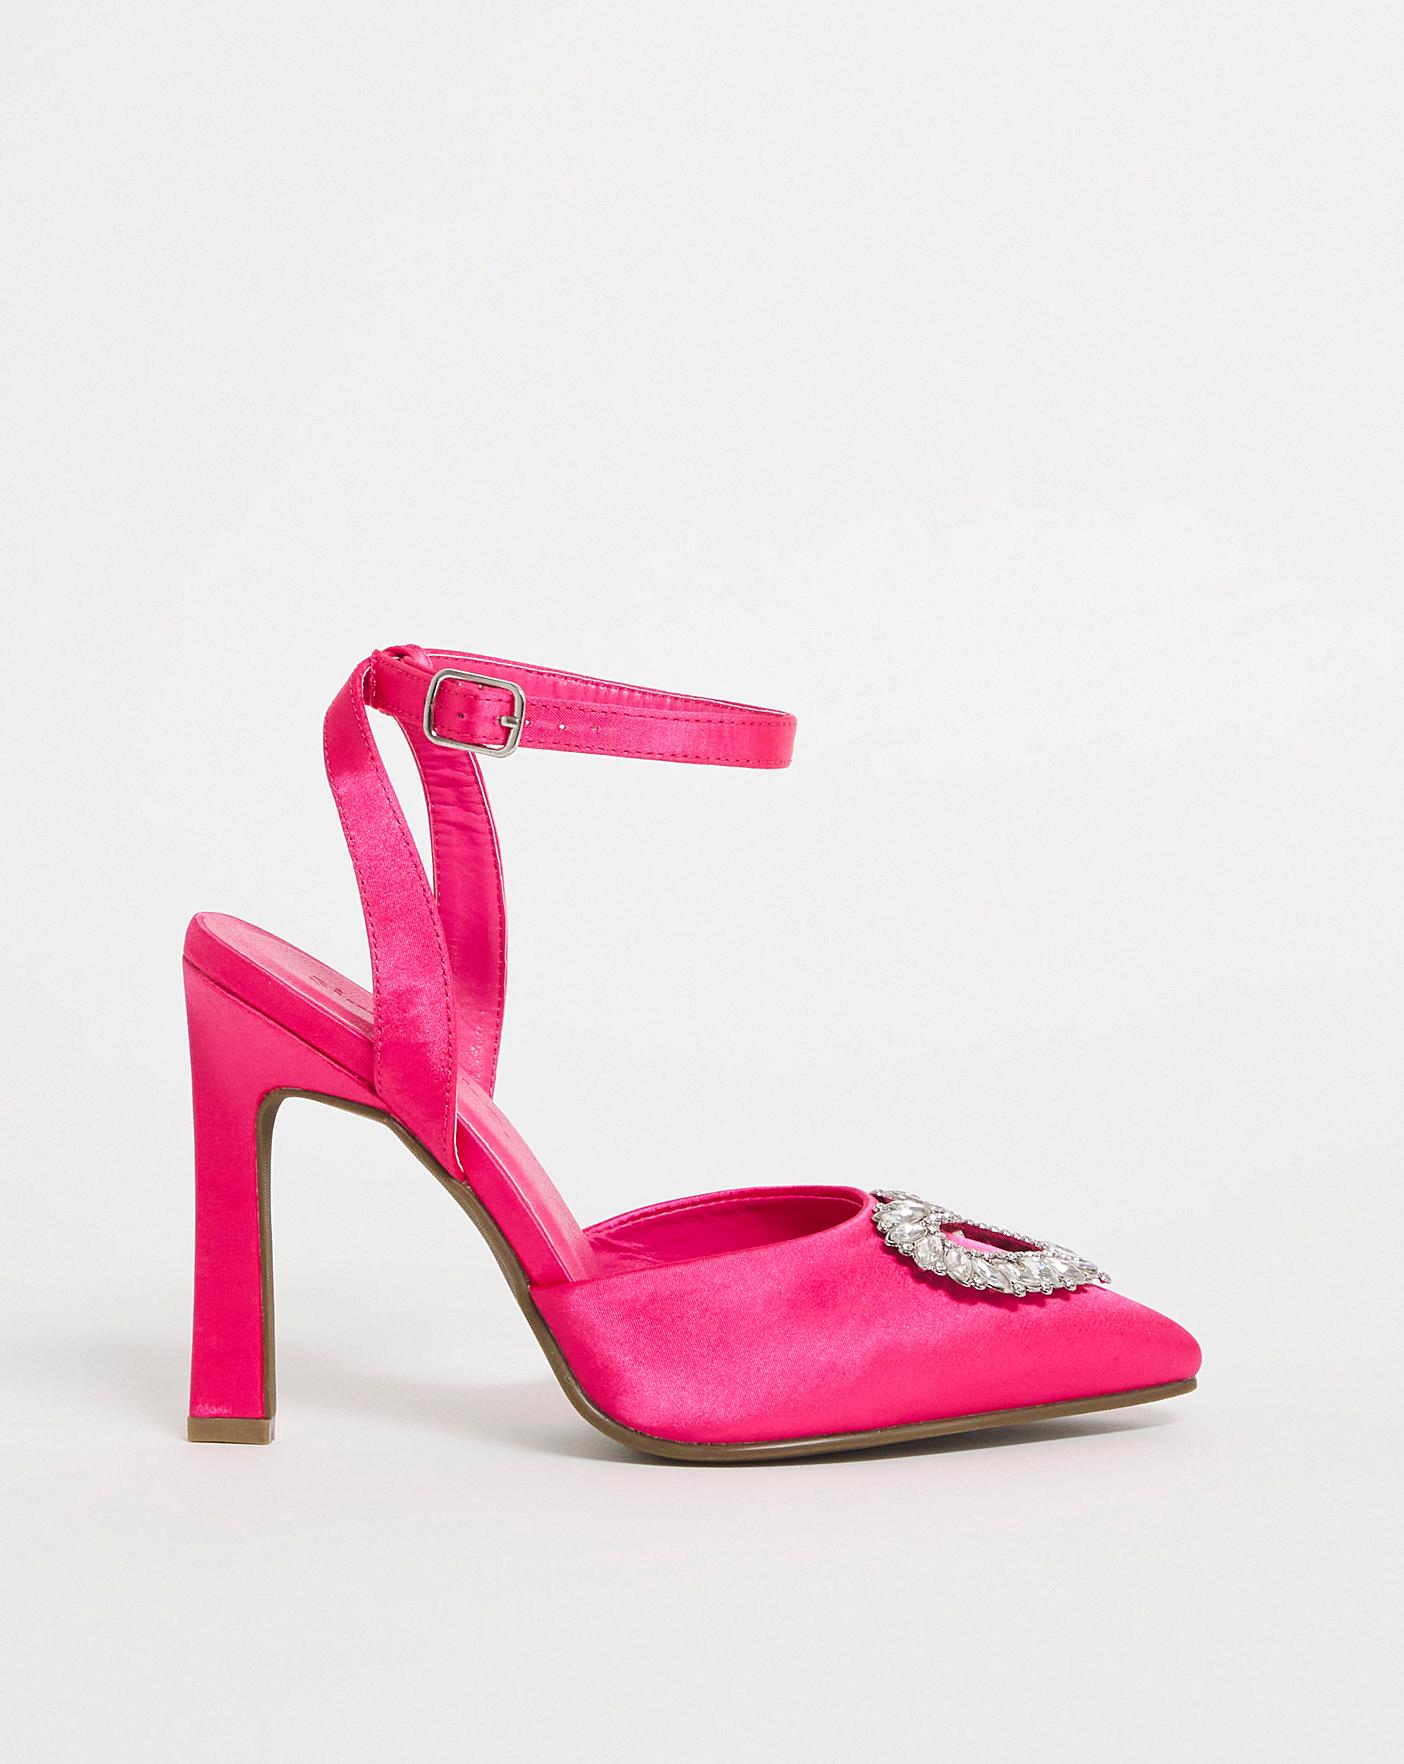 Premium Photo | Pair of stylish high heeled court shoes decorated with  glittering rhinestones